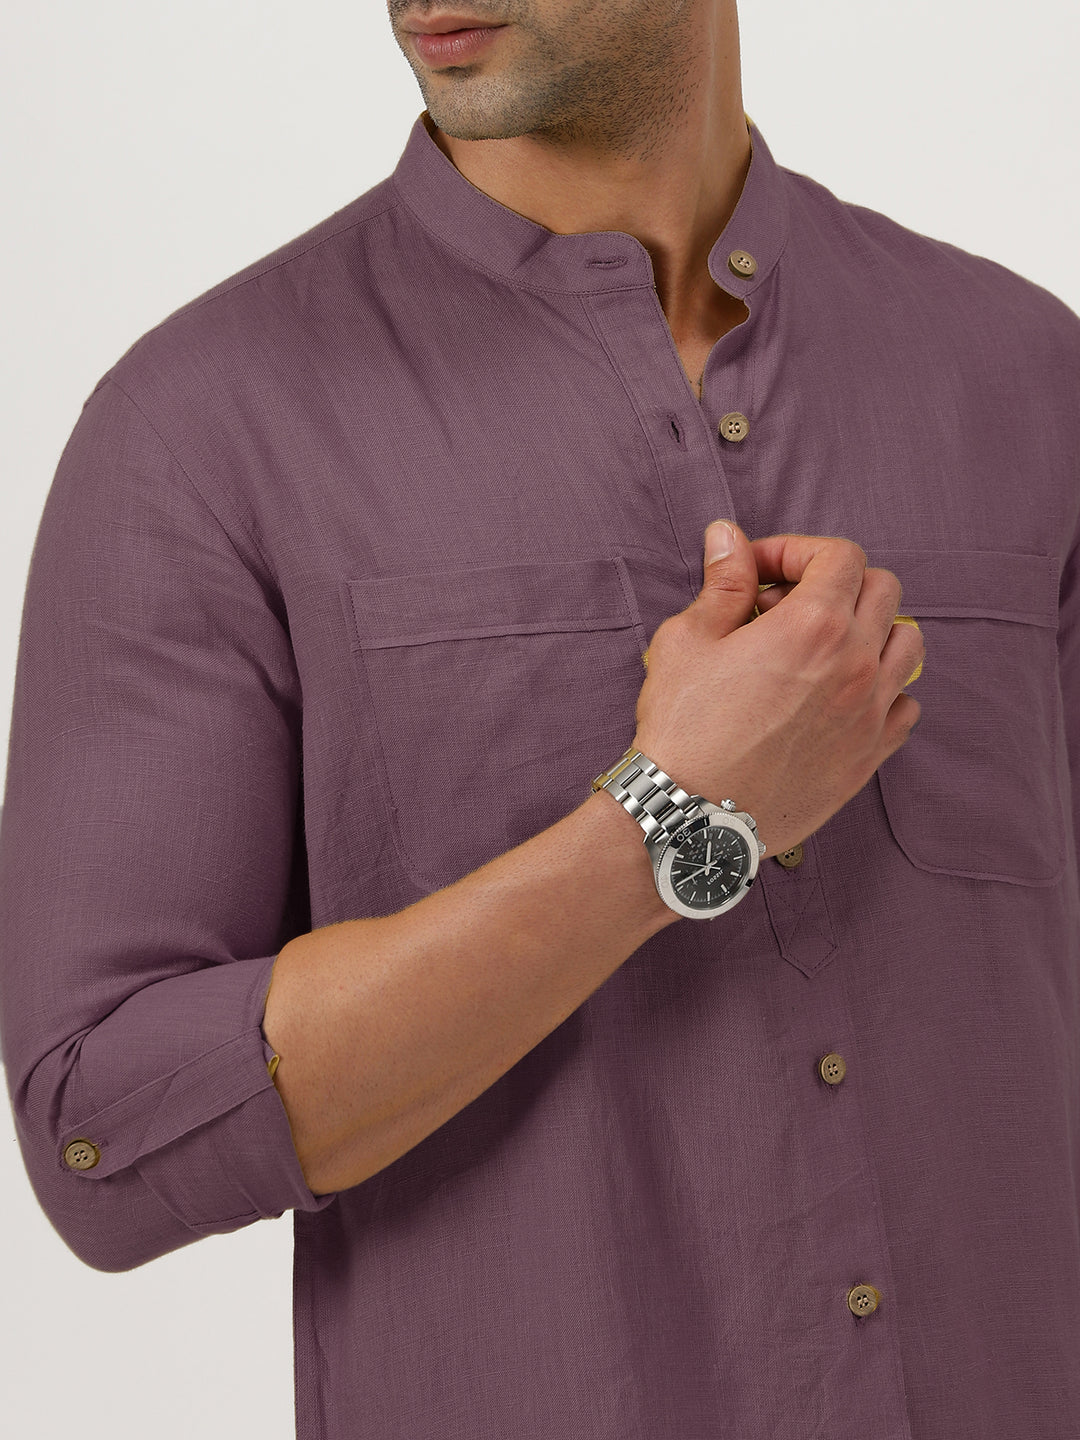 Luca - Pure Linen Double Pocket Full Sleeve Shirt - Berry Purple